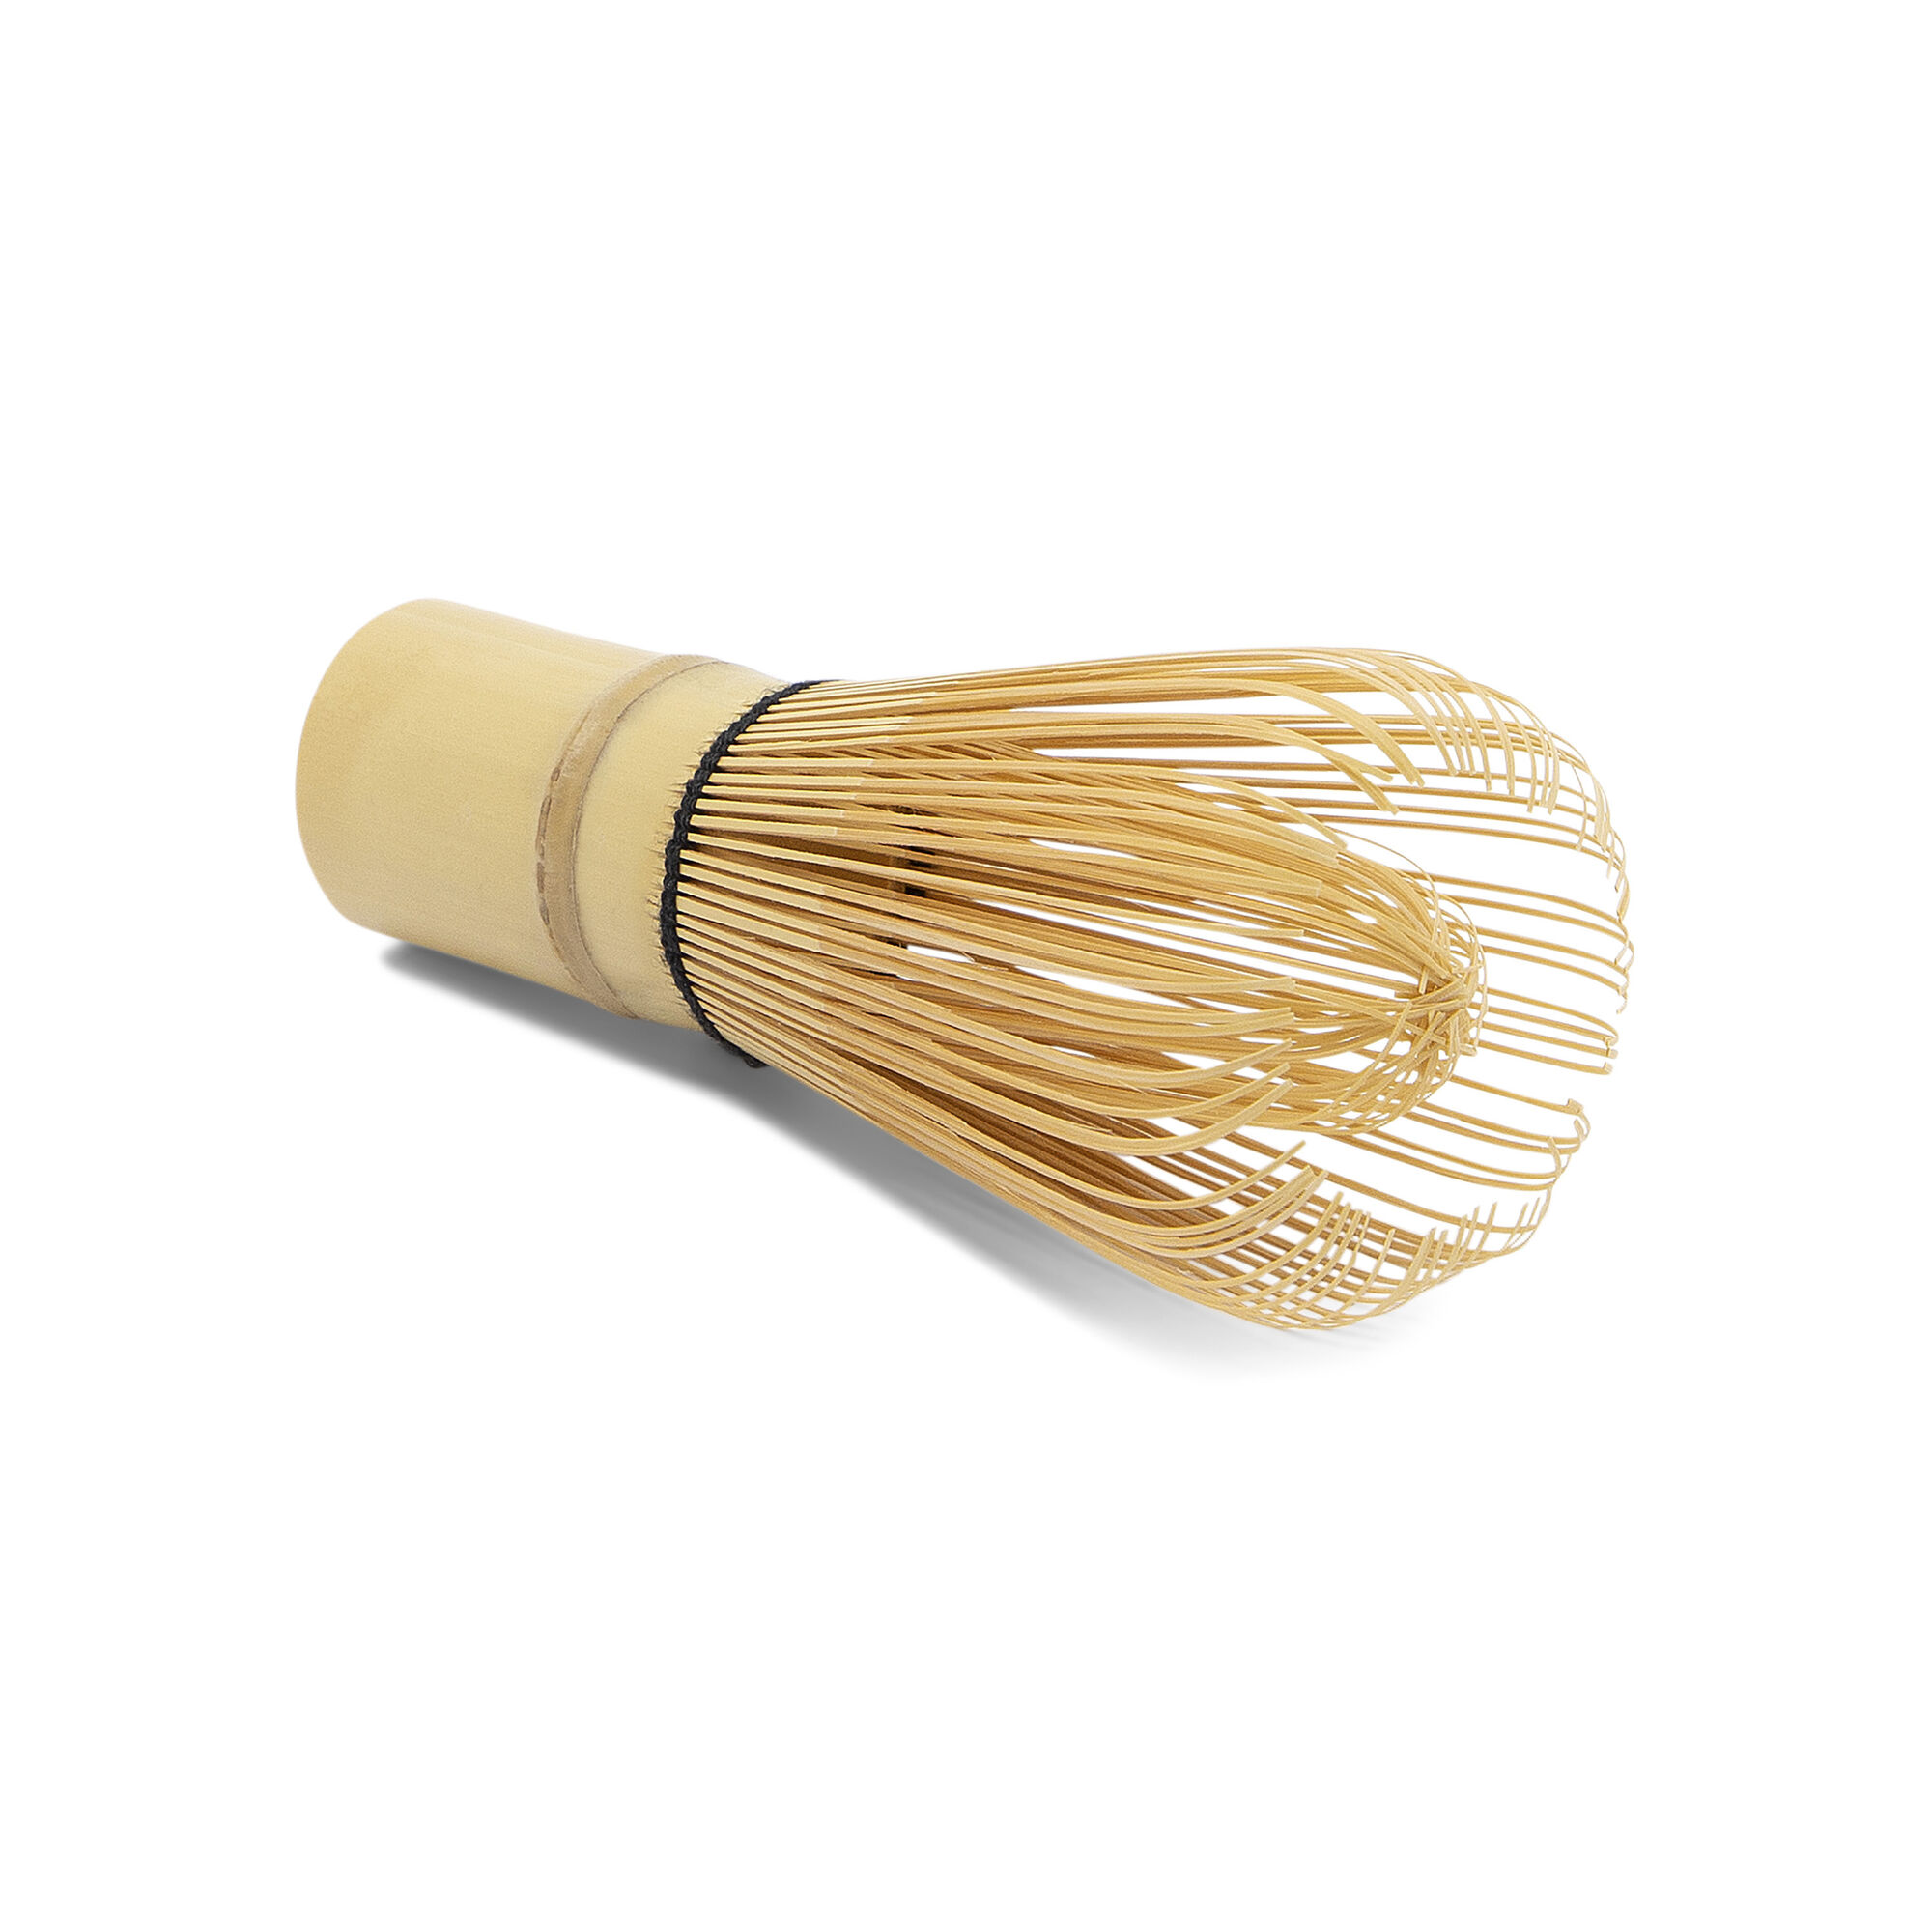 Chasen Matcha Whisk Bamboo Handcrafted Mixer Powder Brush Tools